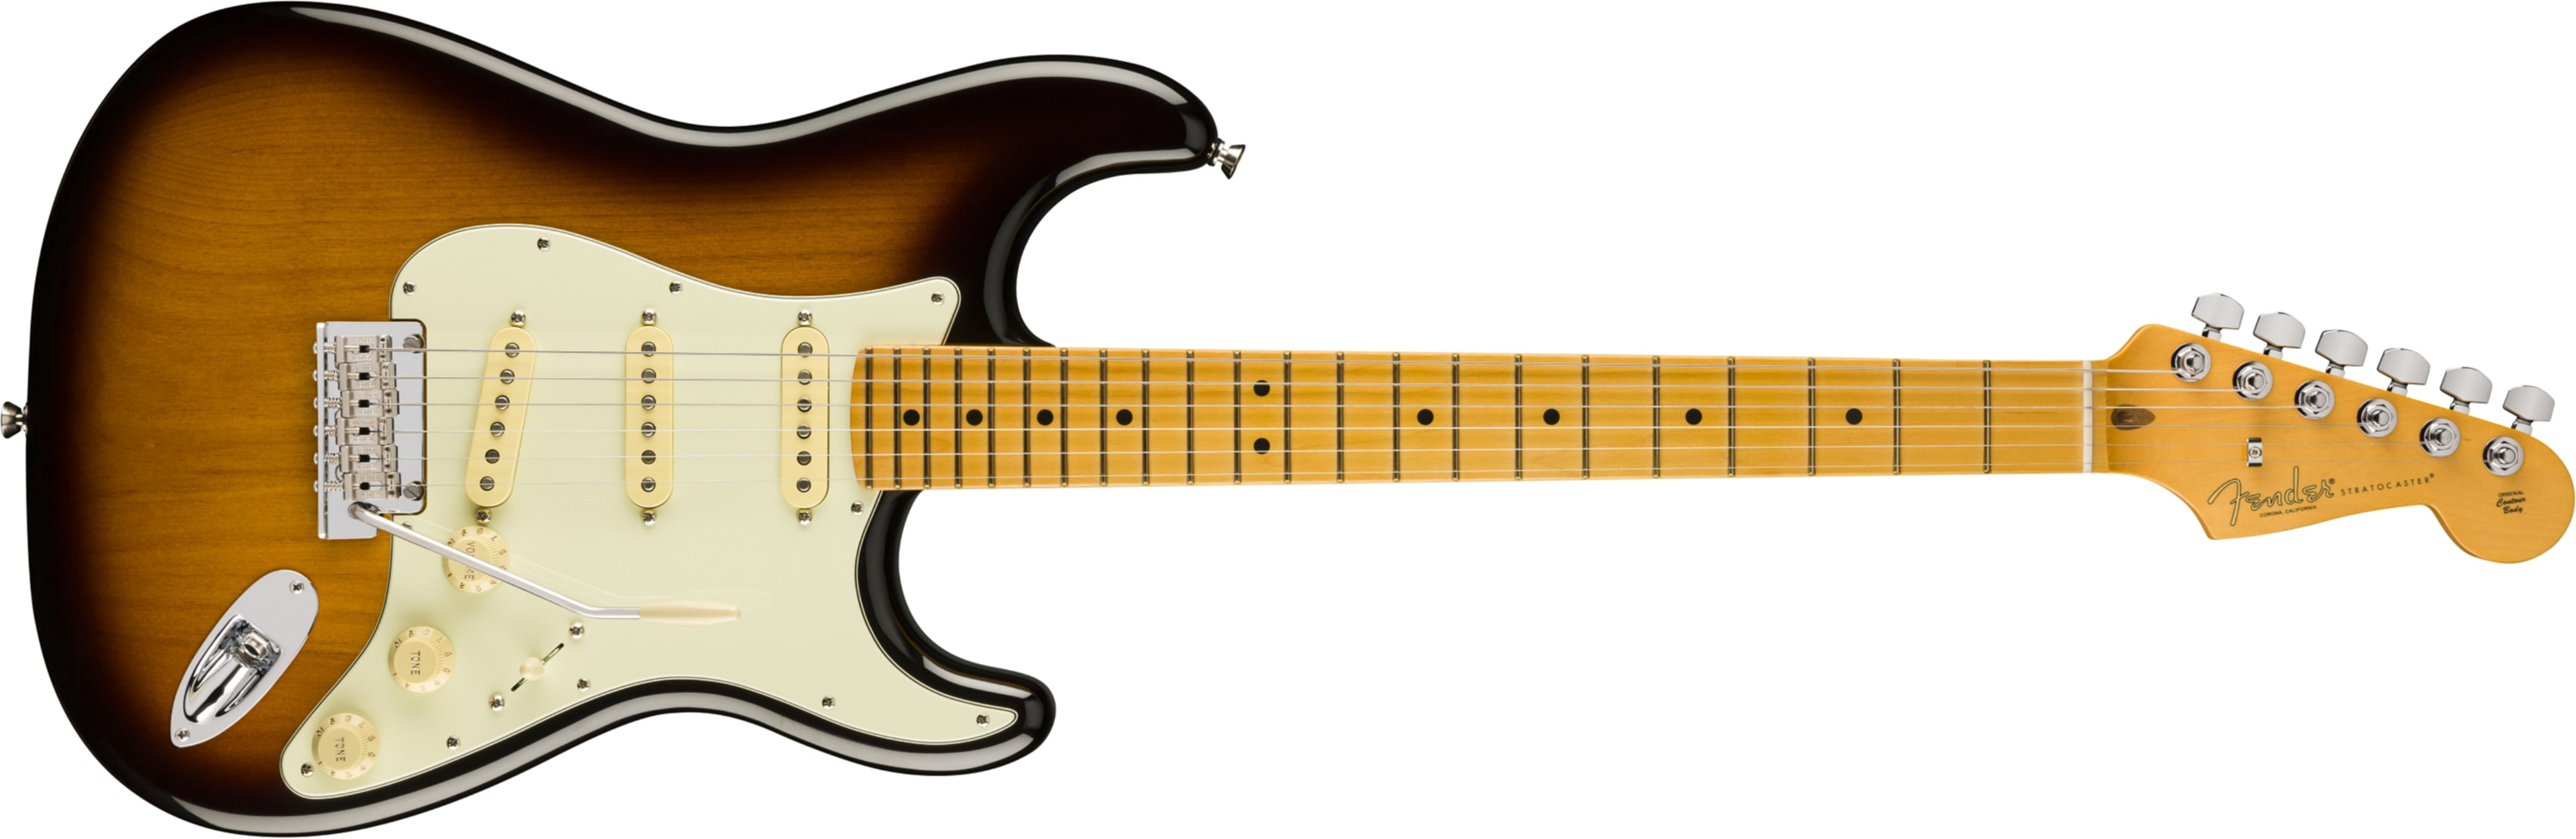 Fender Stratocaster American Pro Ii 70th Anniversary 3s Trem Mn - 2-color Sunburst - Guitarra eléctrica con forma de str. - Main picture